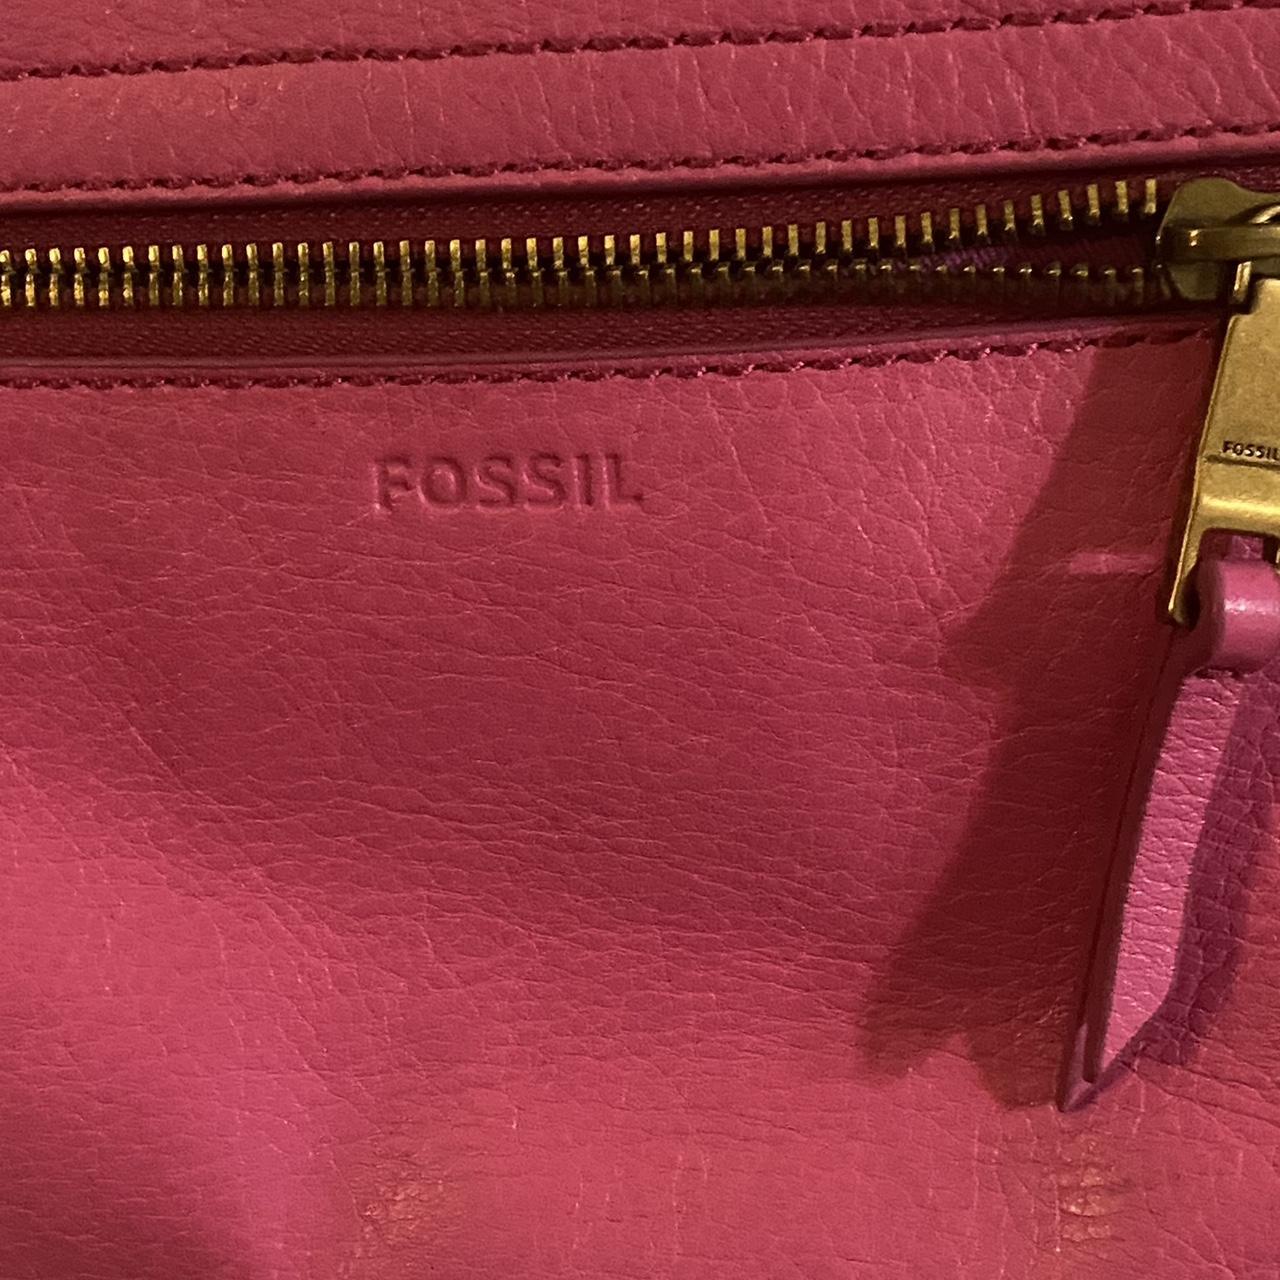 Buy Fossil Liza Pink Crossbody Bag ZB1771G656 at Amazon.in